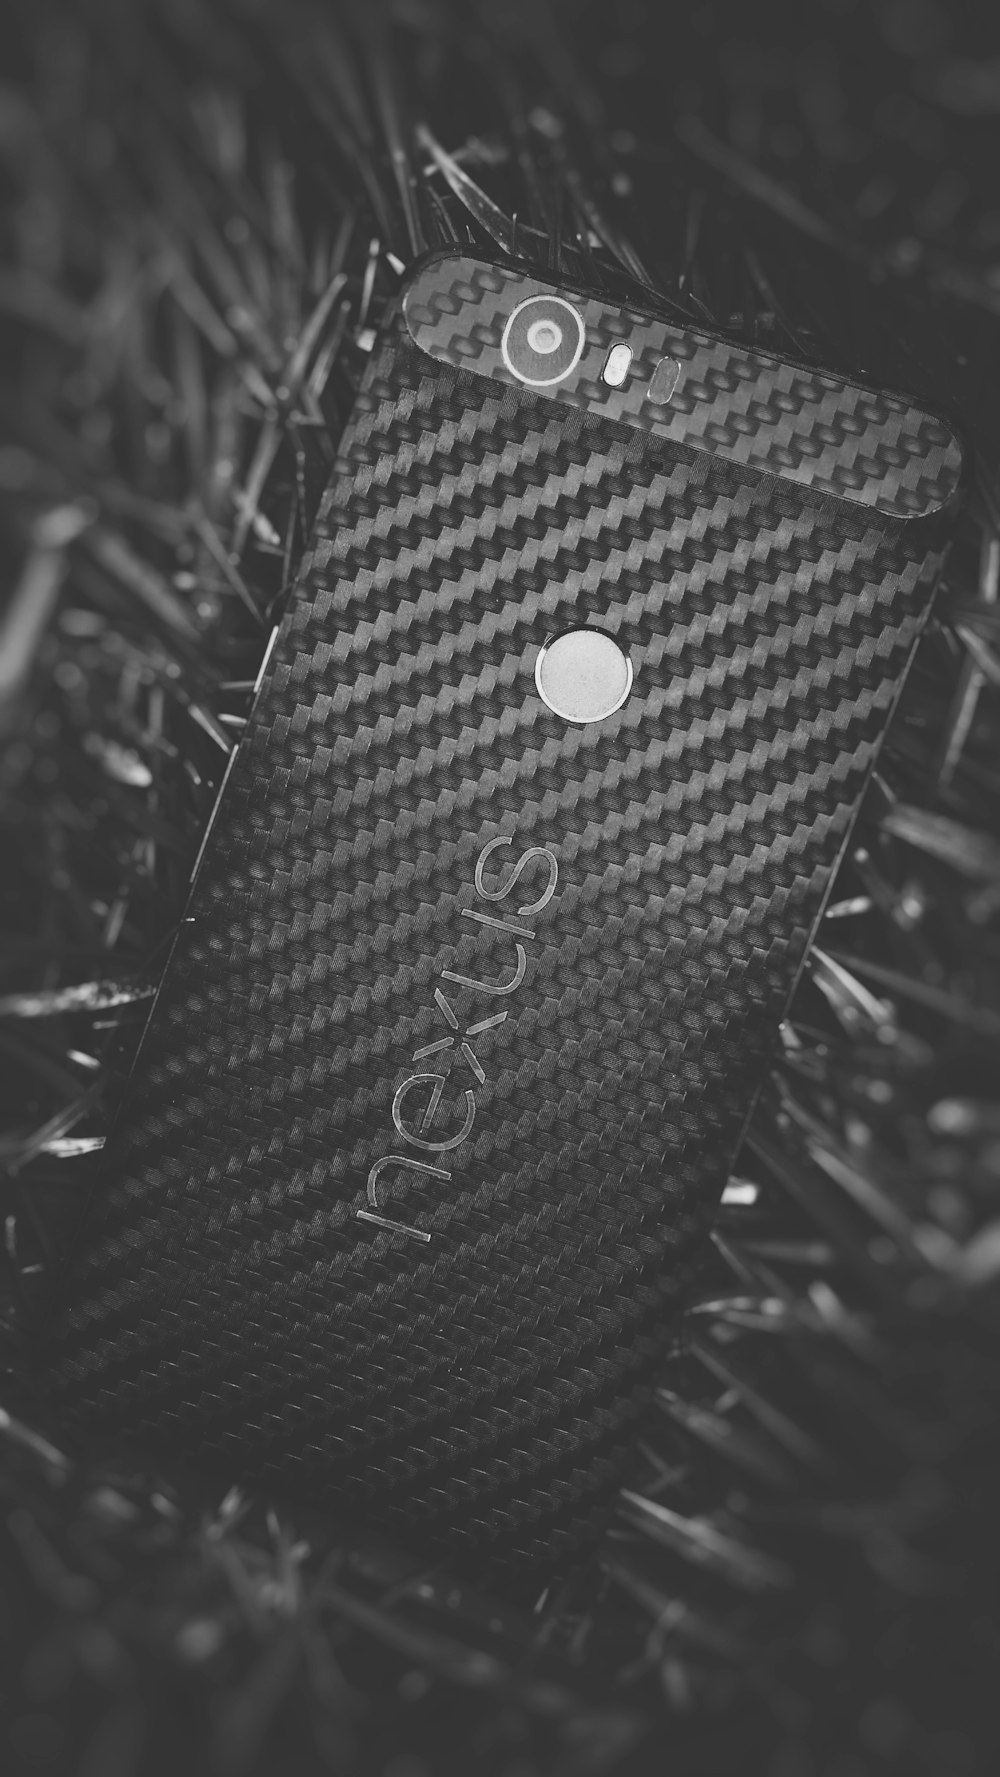 A black Nexus phone sitting on the ground.